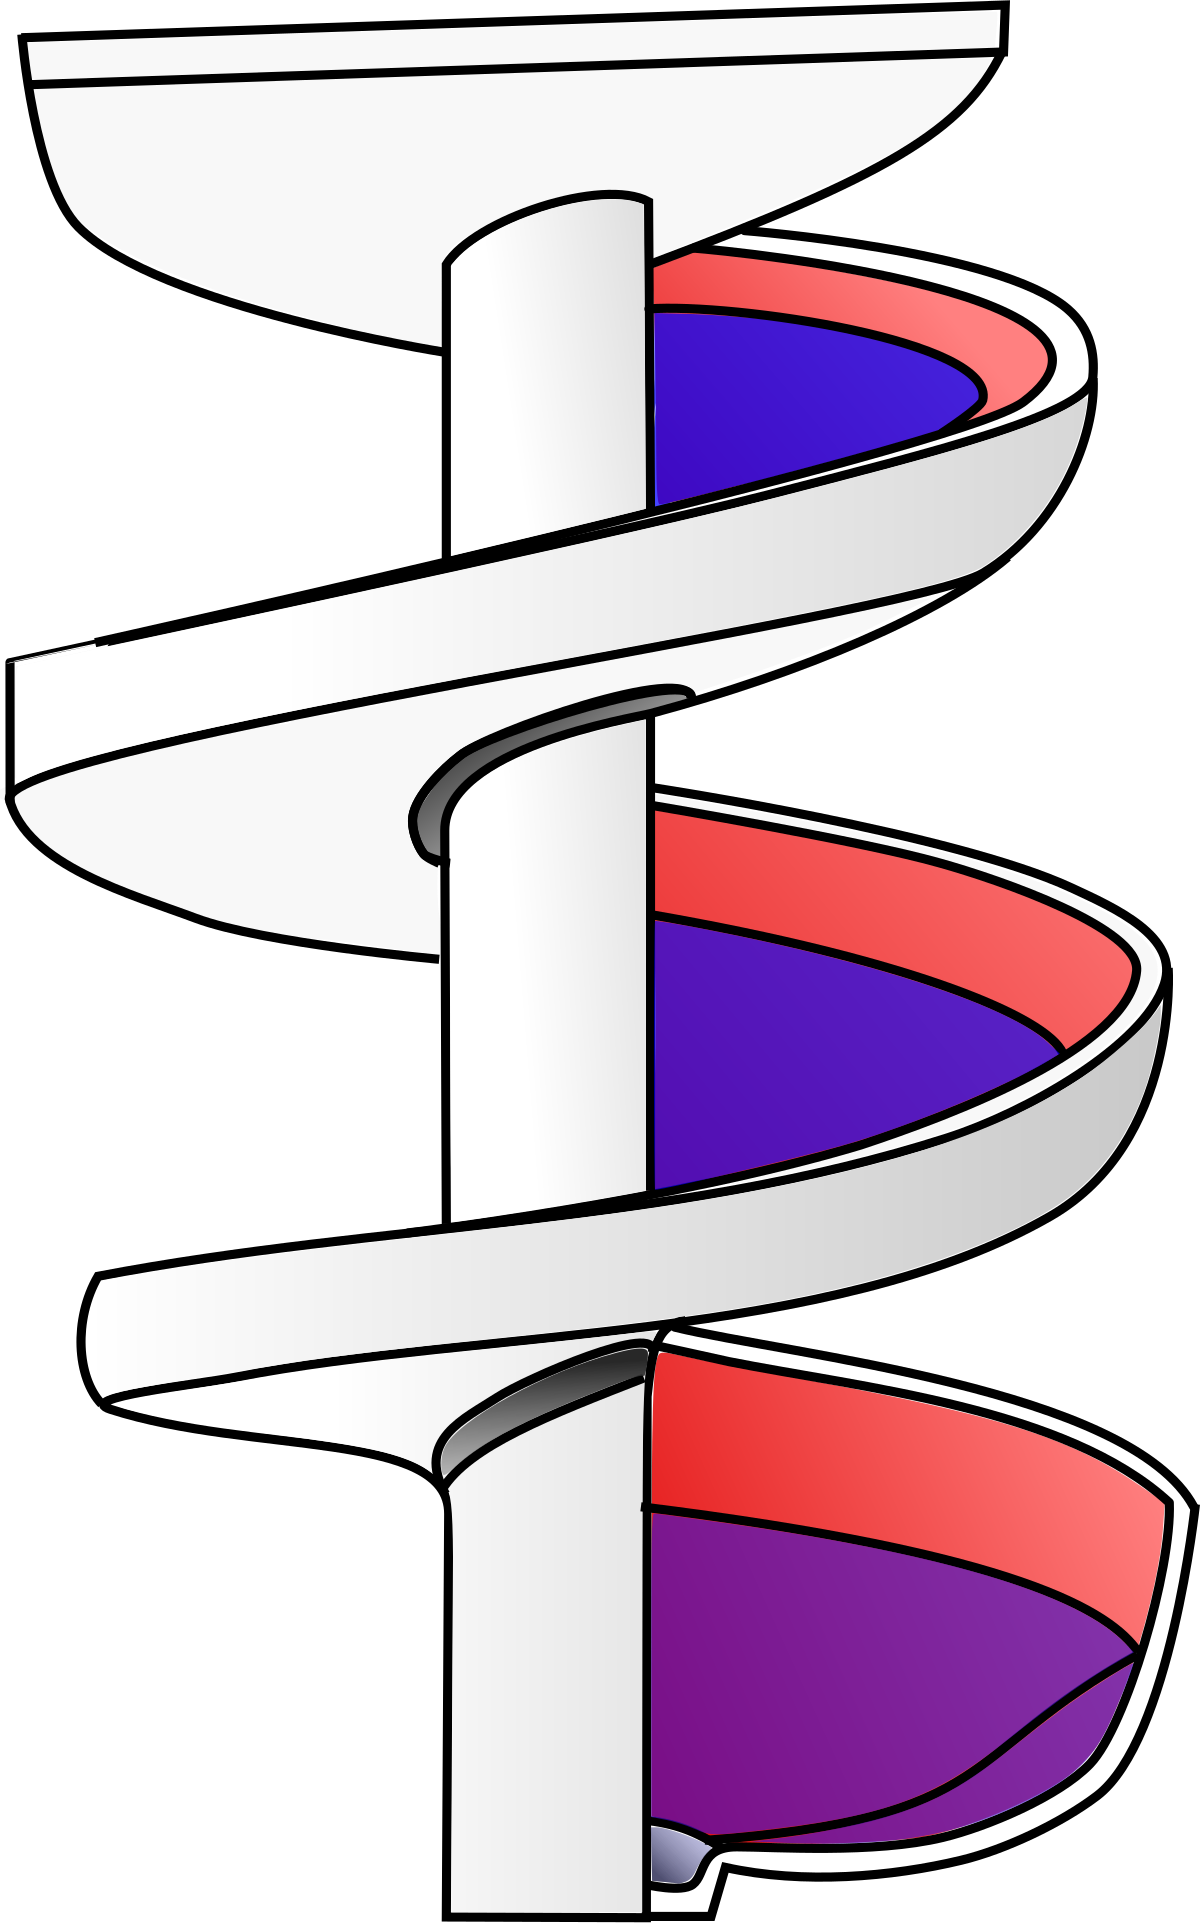 Spiral vegetable slicer - Wikipedia